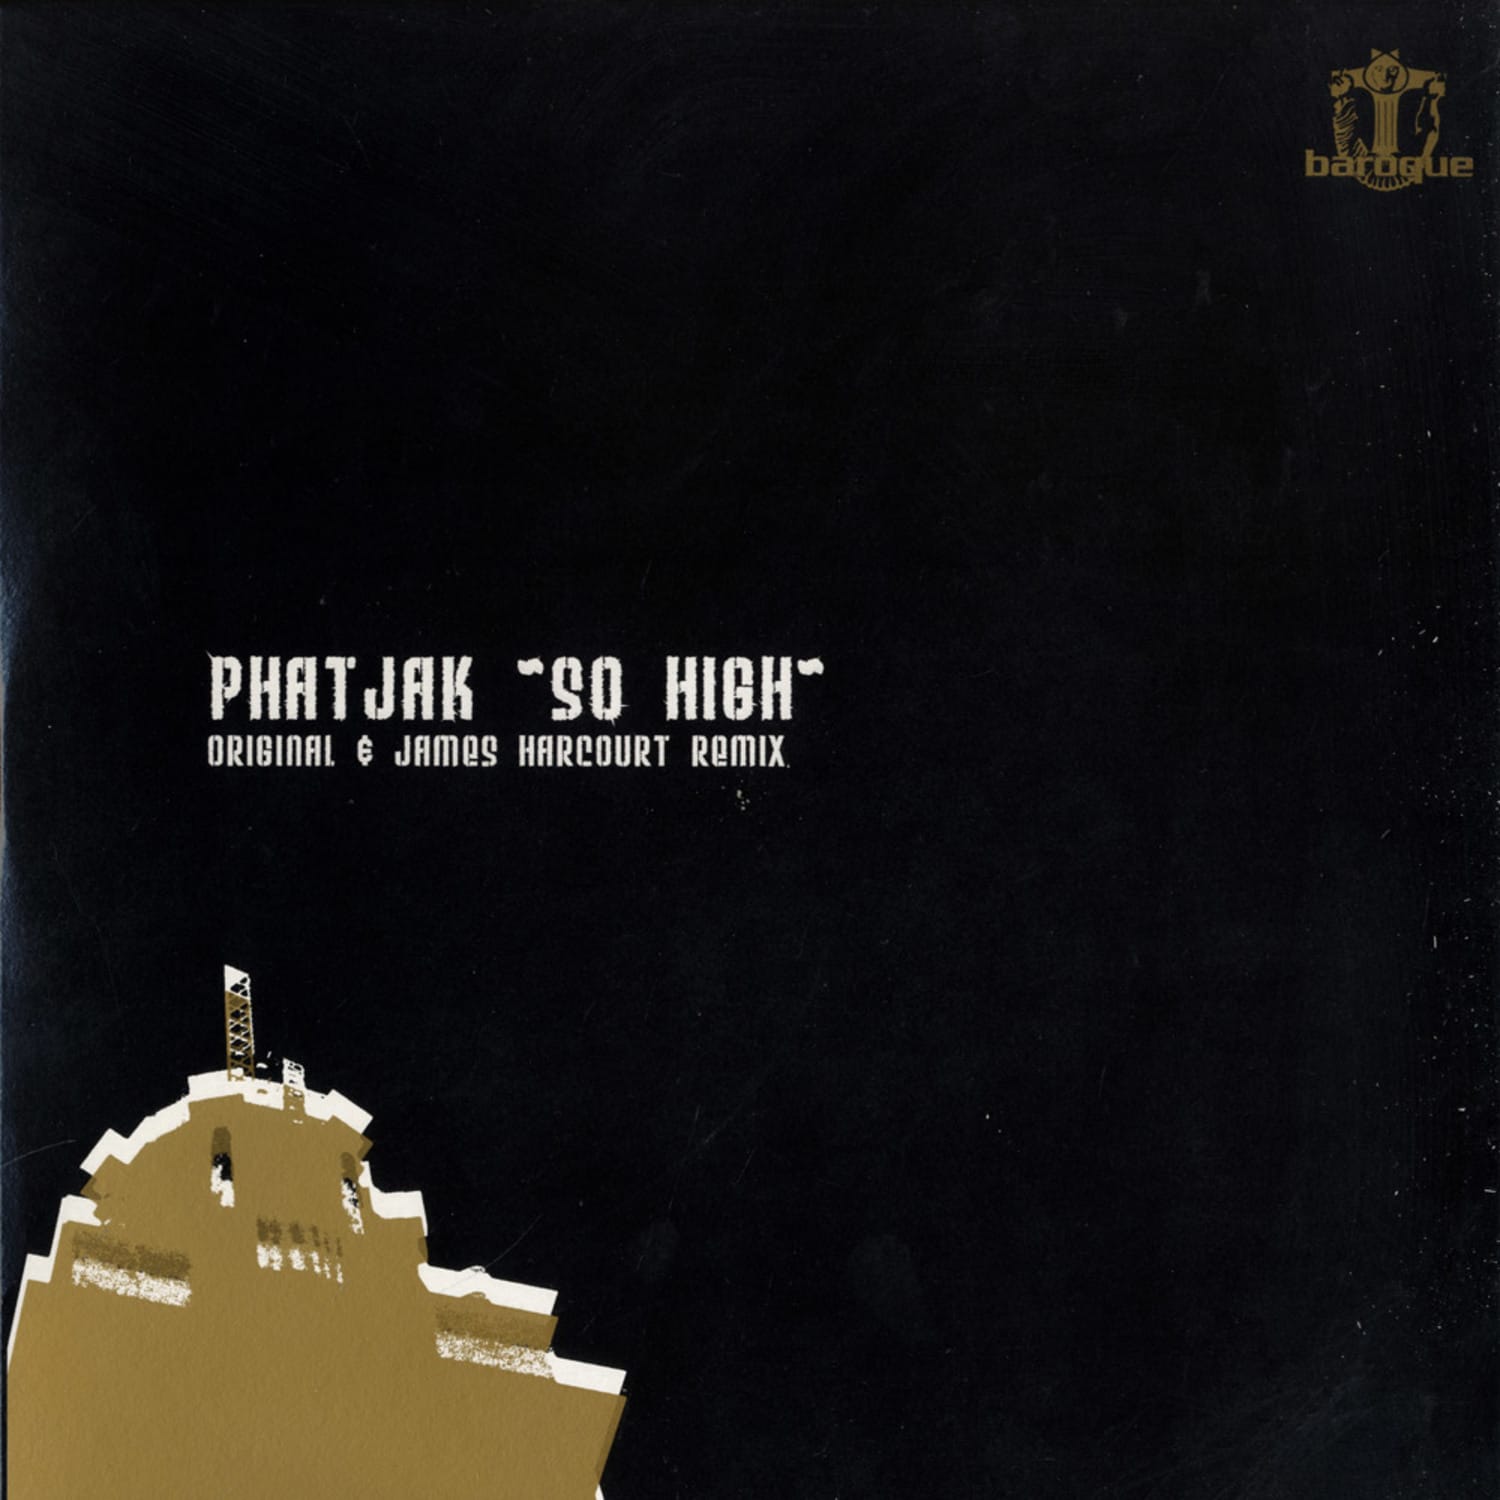 Phat Jack - SO HIGH